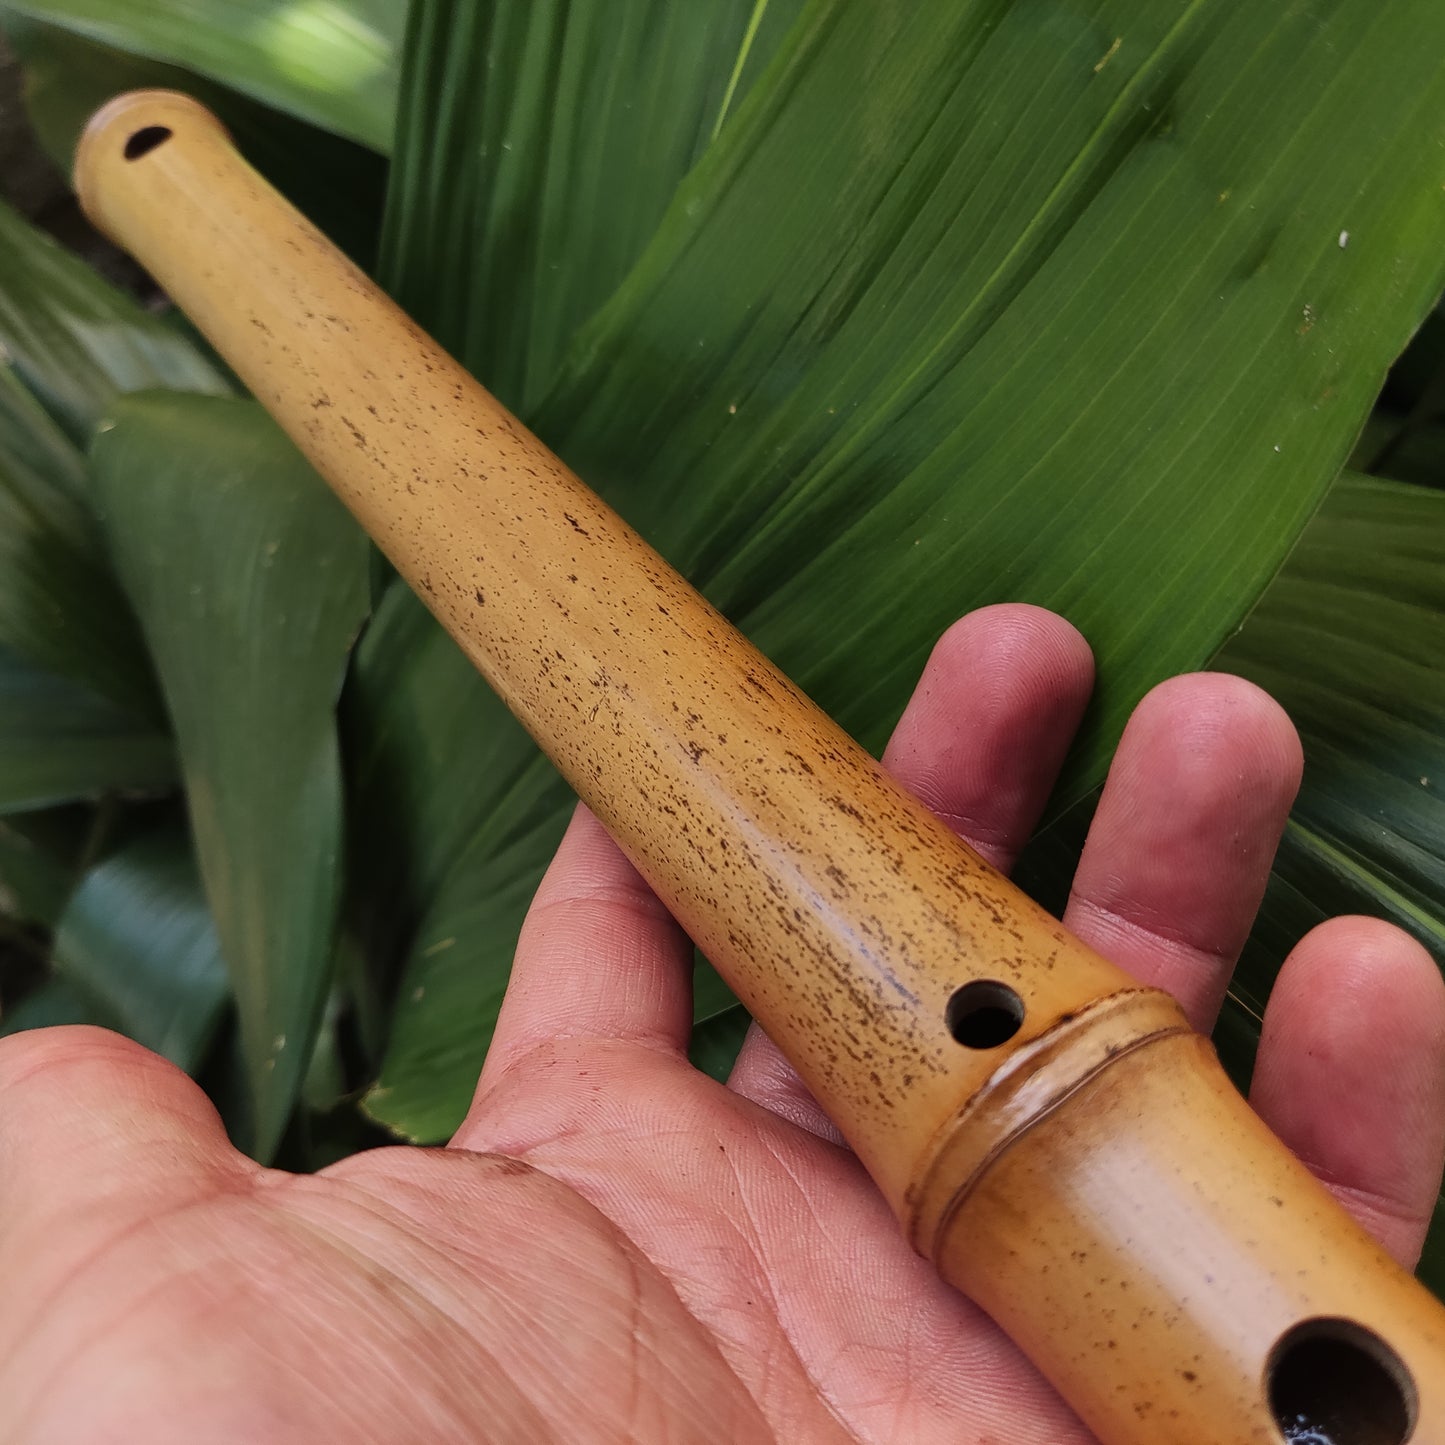 Asavari Raga Bamboo Transverse Flute in the Key of E | Rui Gomes | SoprosRG